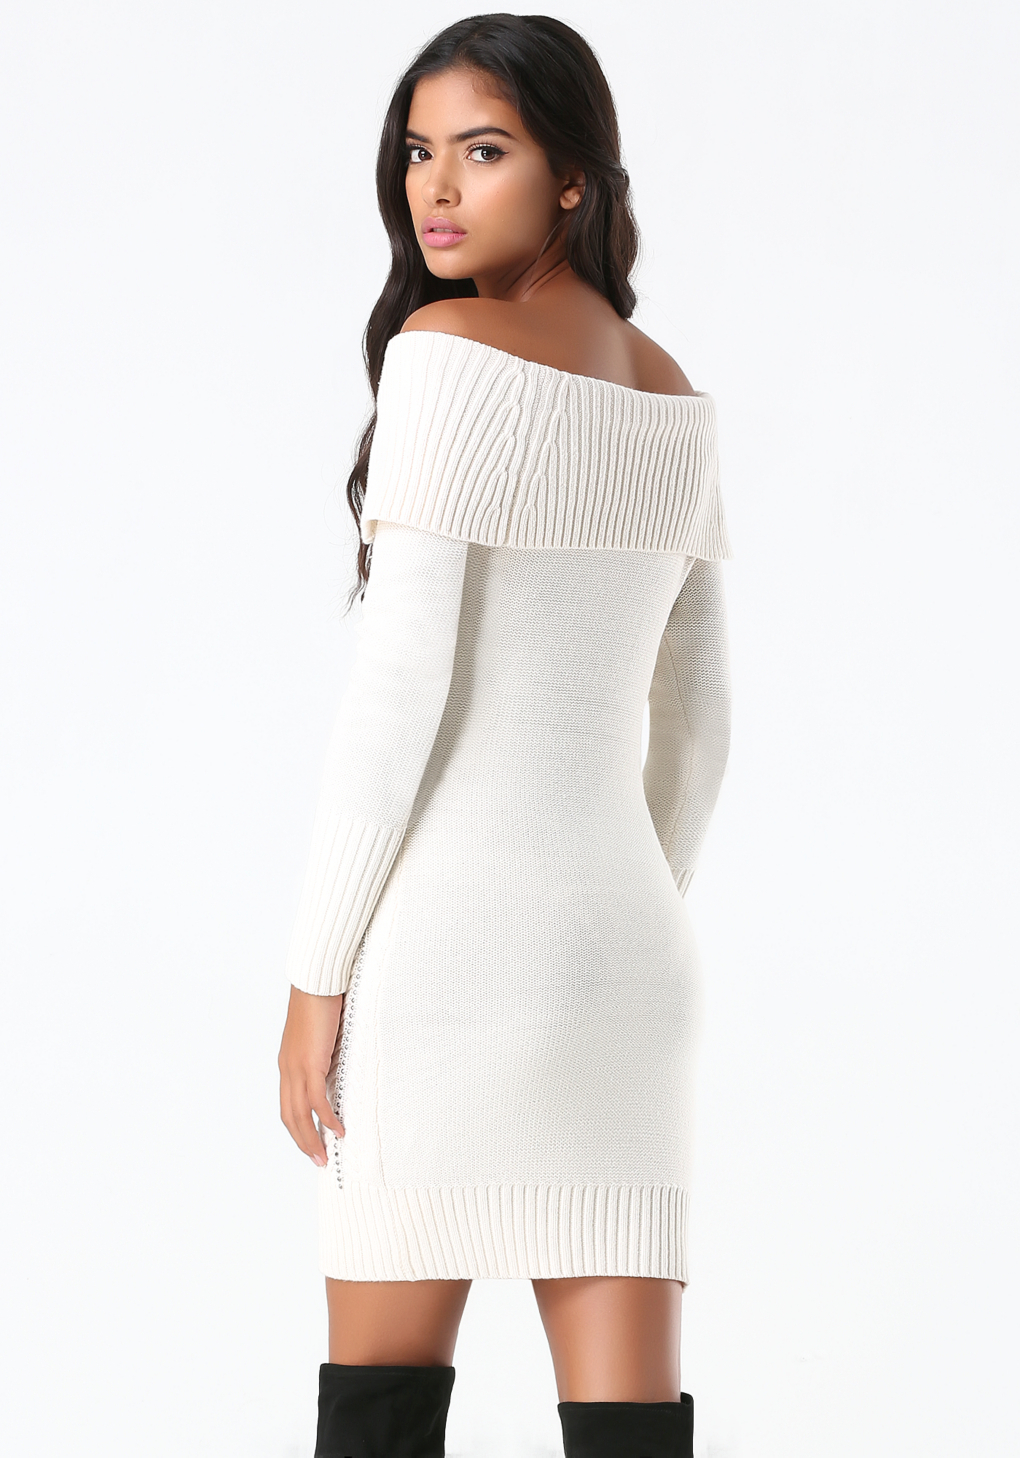 Bebe Off Shoulder Sweater Dress in White - Lyst